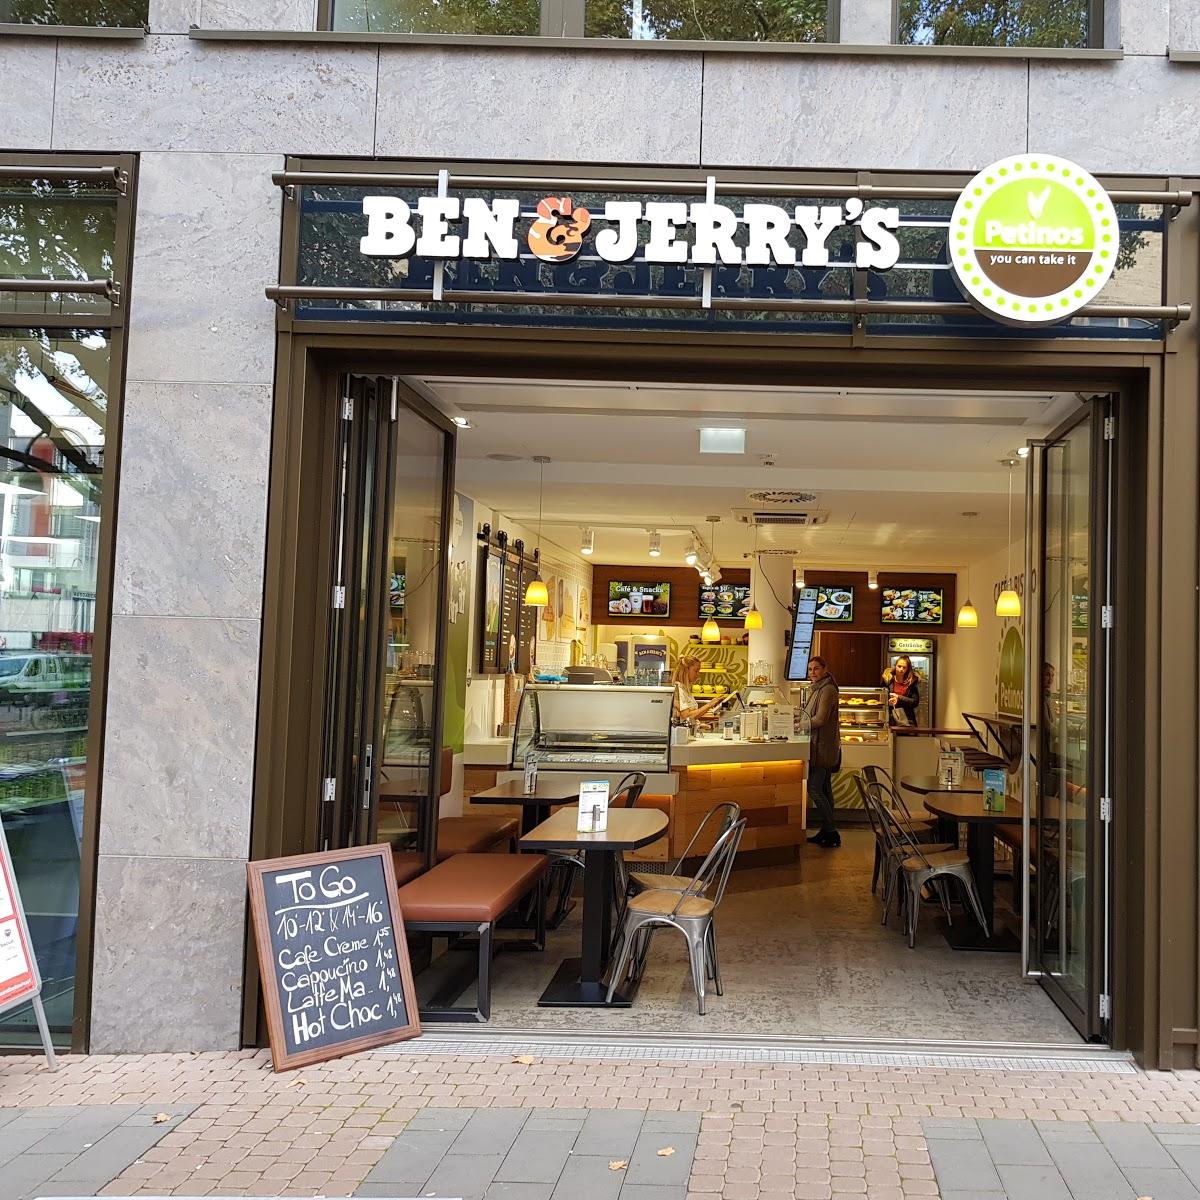 Restaurant "Ben & Jerry